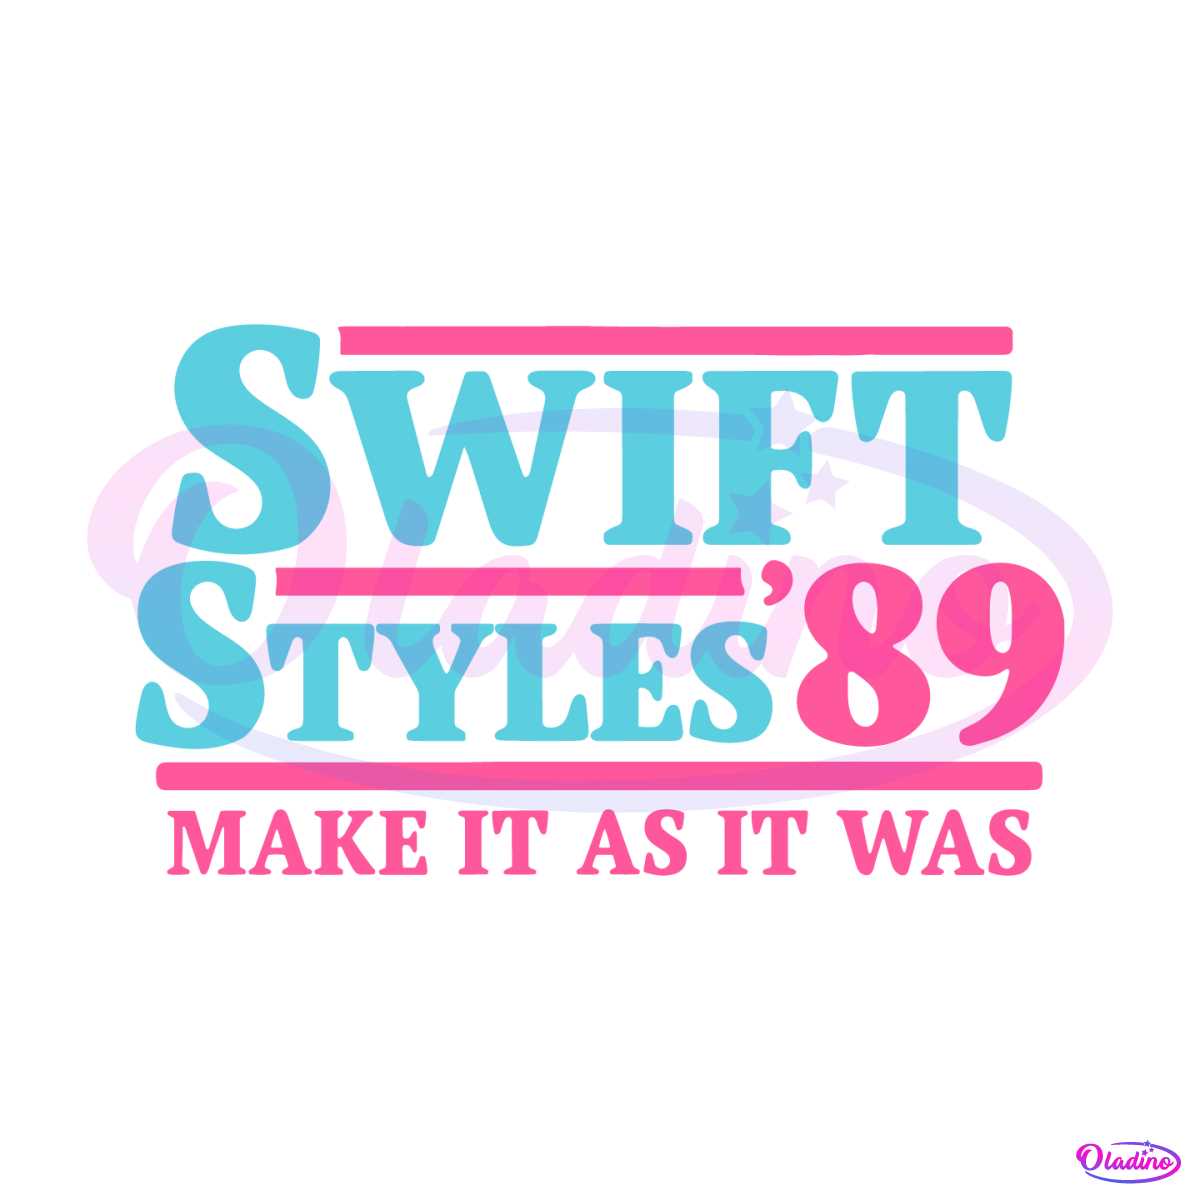 swift-styles-89-make-it-as-it-was-svg-cutting-digital-file